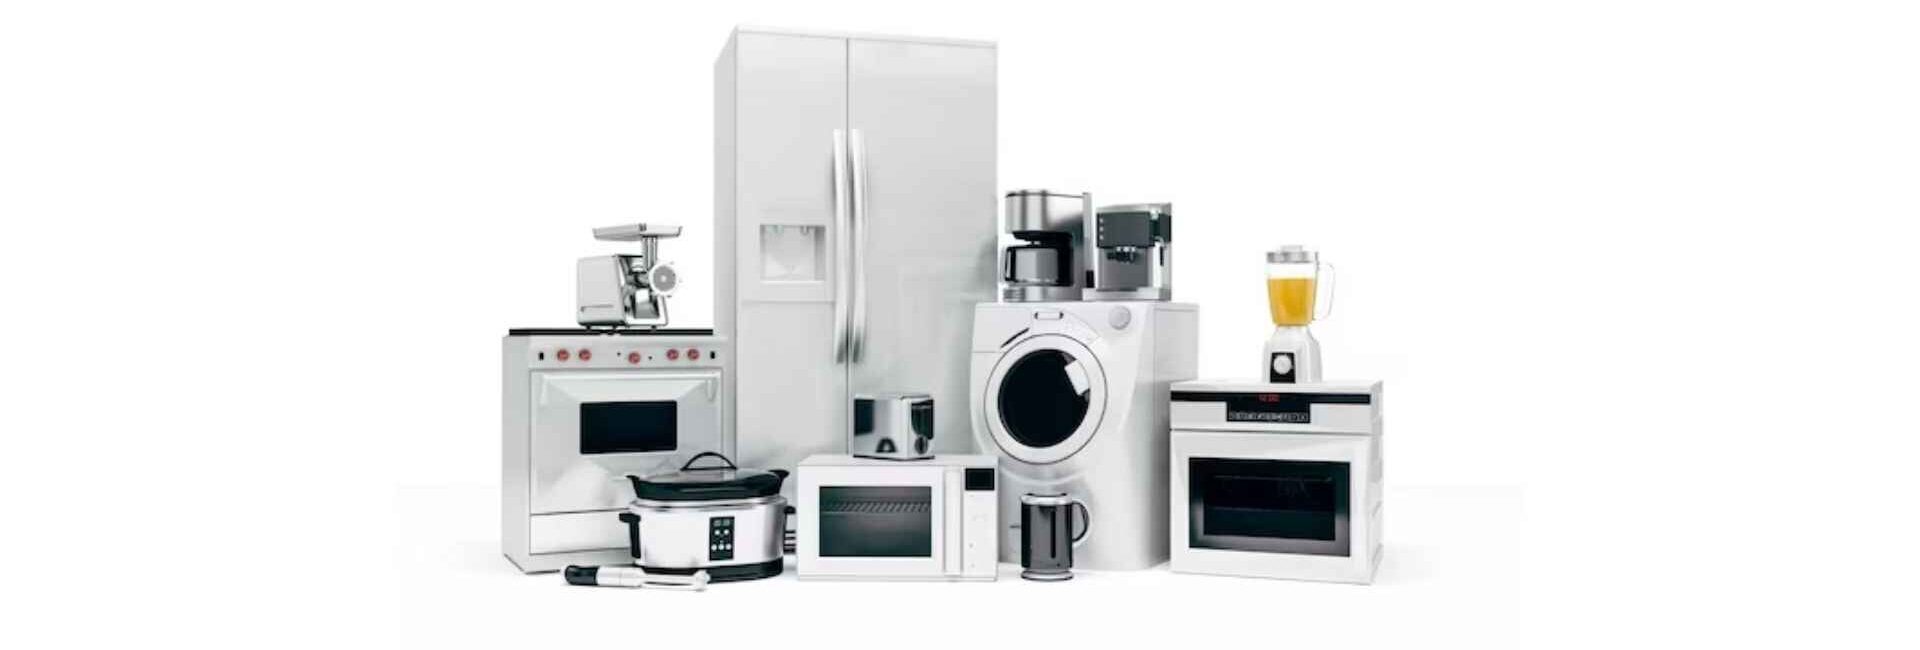 Meenu Electronics - home appliances in Noida